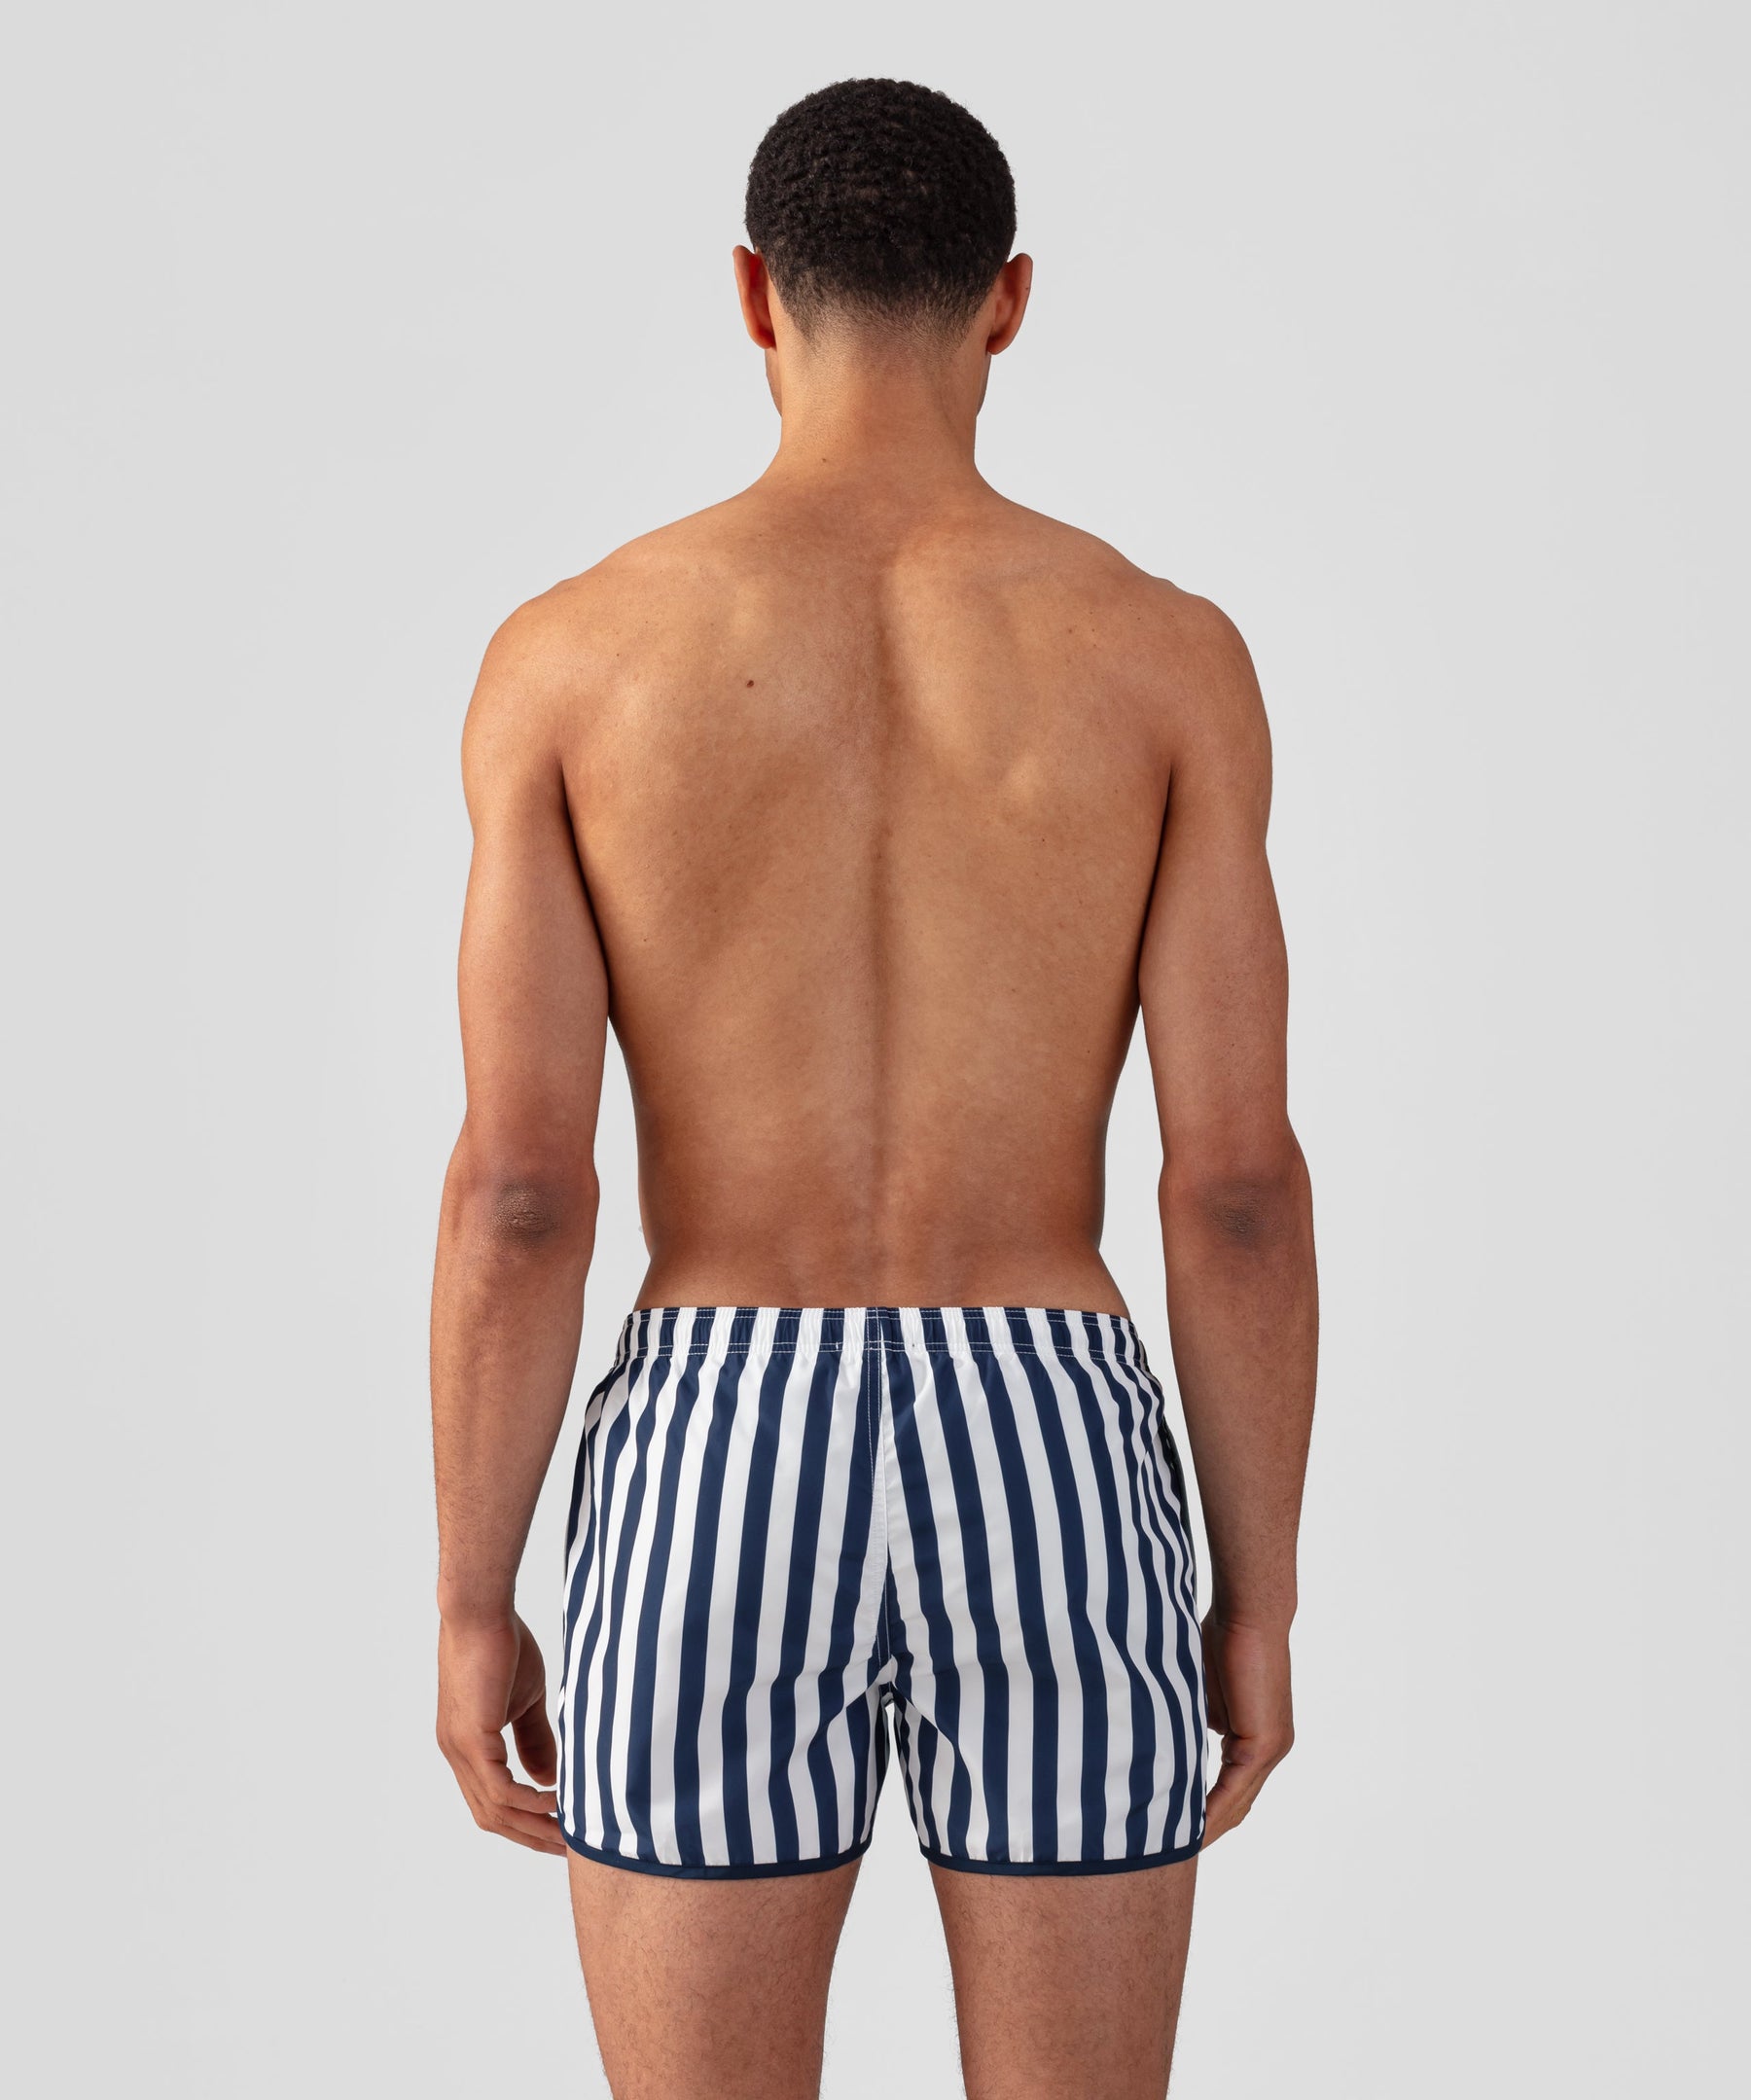 Marathon Swim Shorts Vertical Stripes: Navy/White